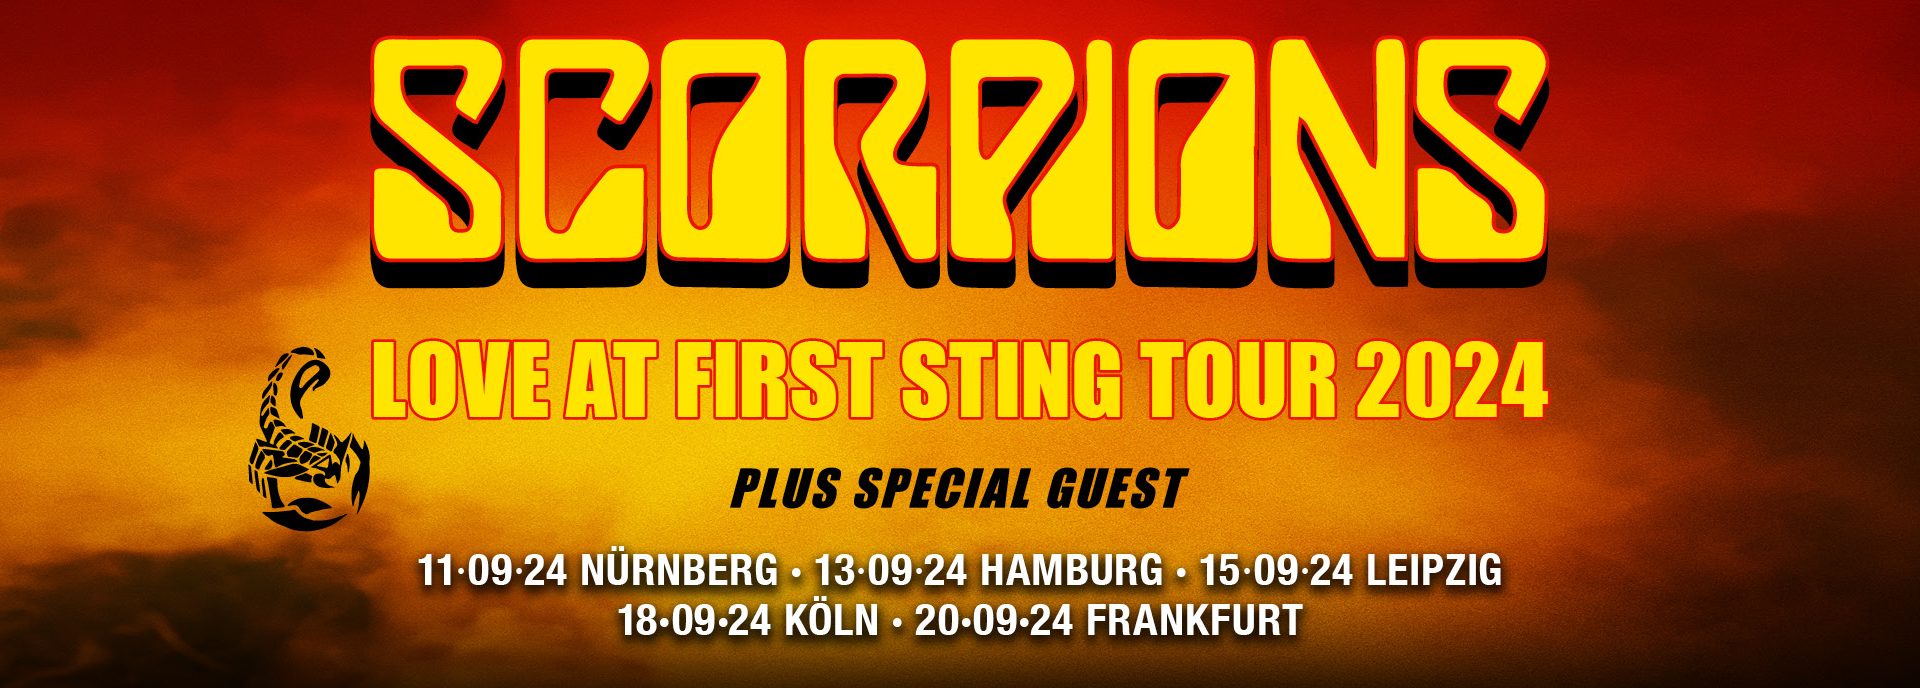 Scorpions Tour 2024: Rock Your World!